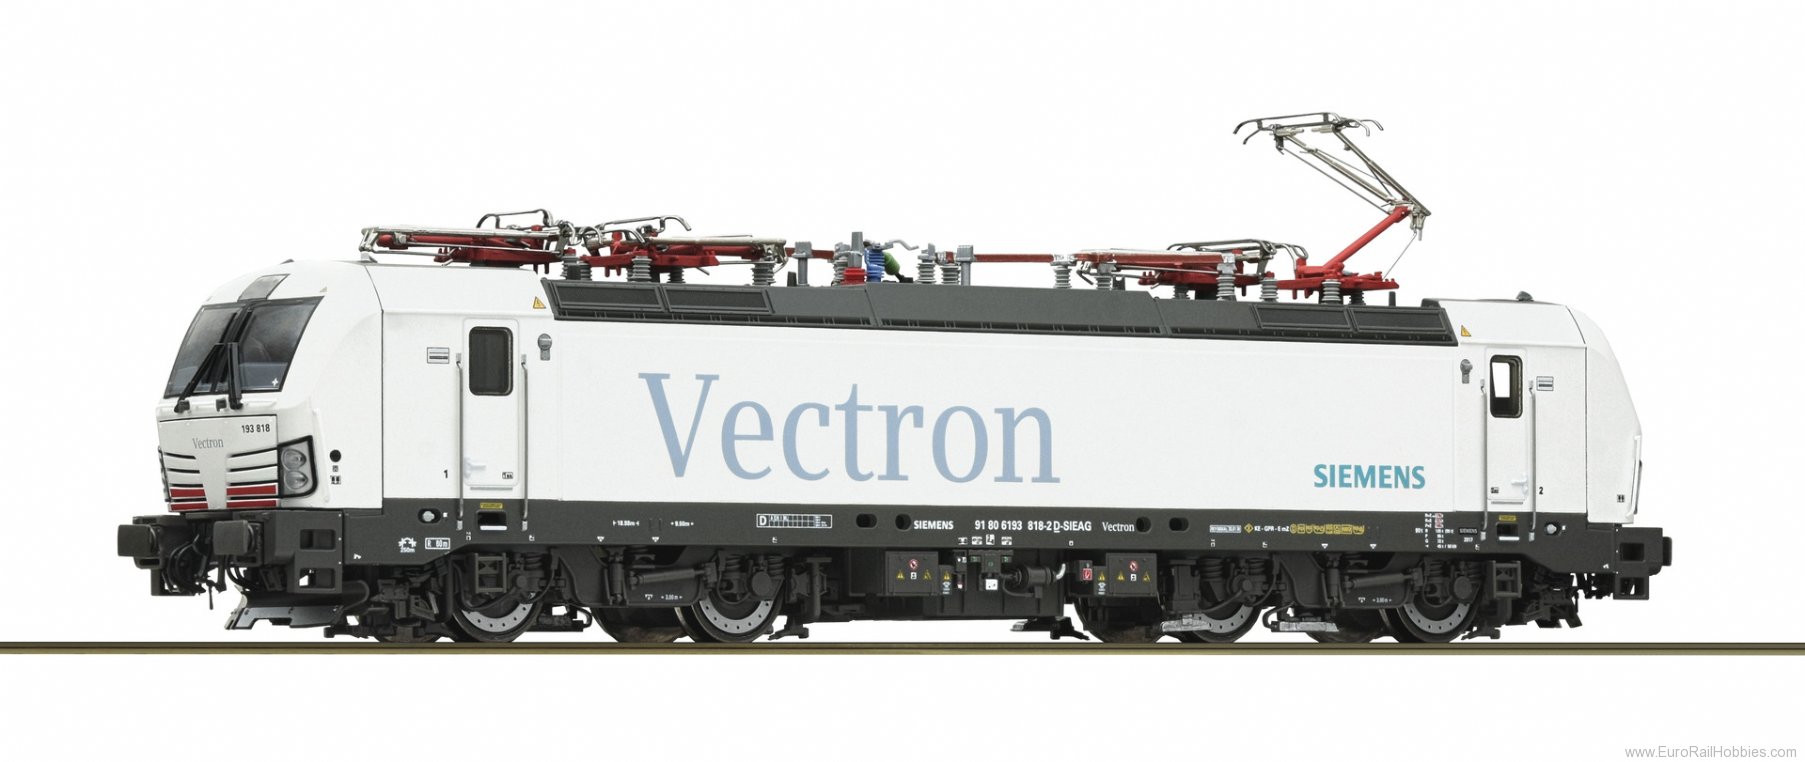 Roco 7520040 Electric locomotive 193 818-2, Siemens (Markl